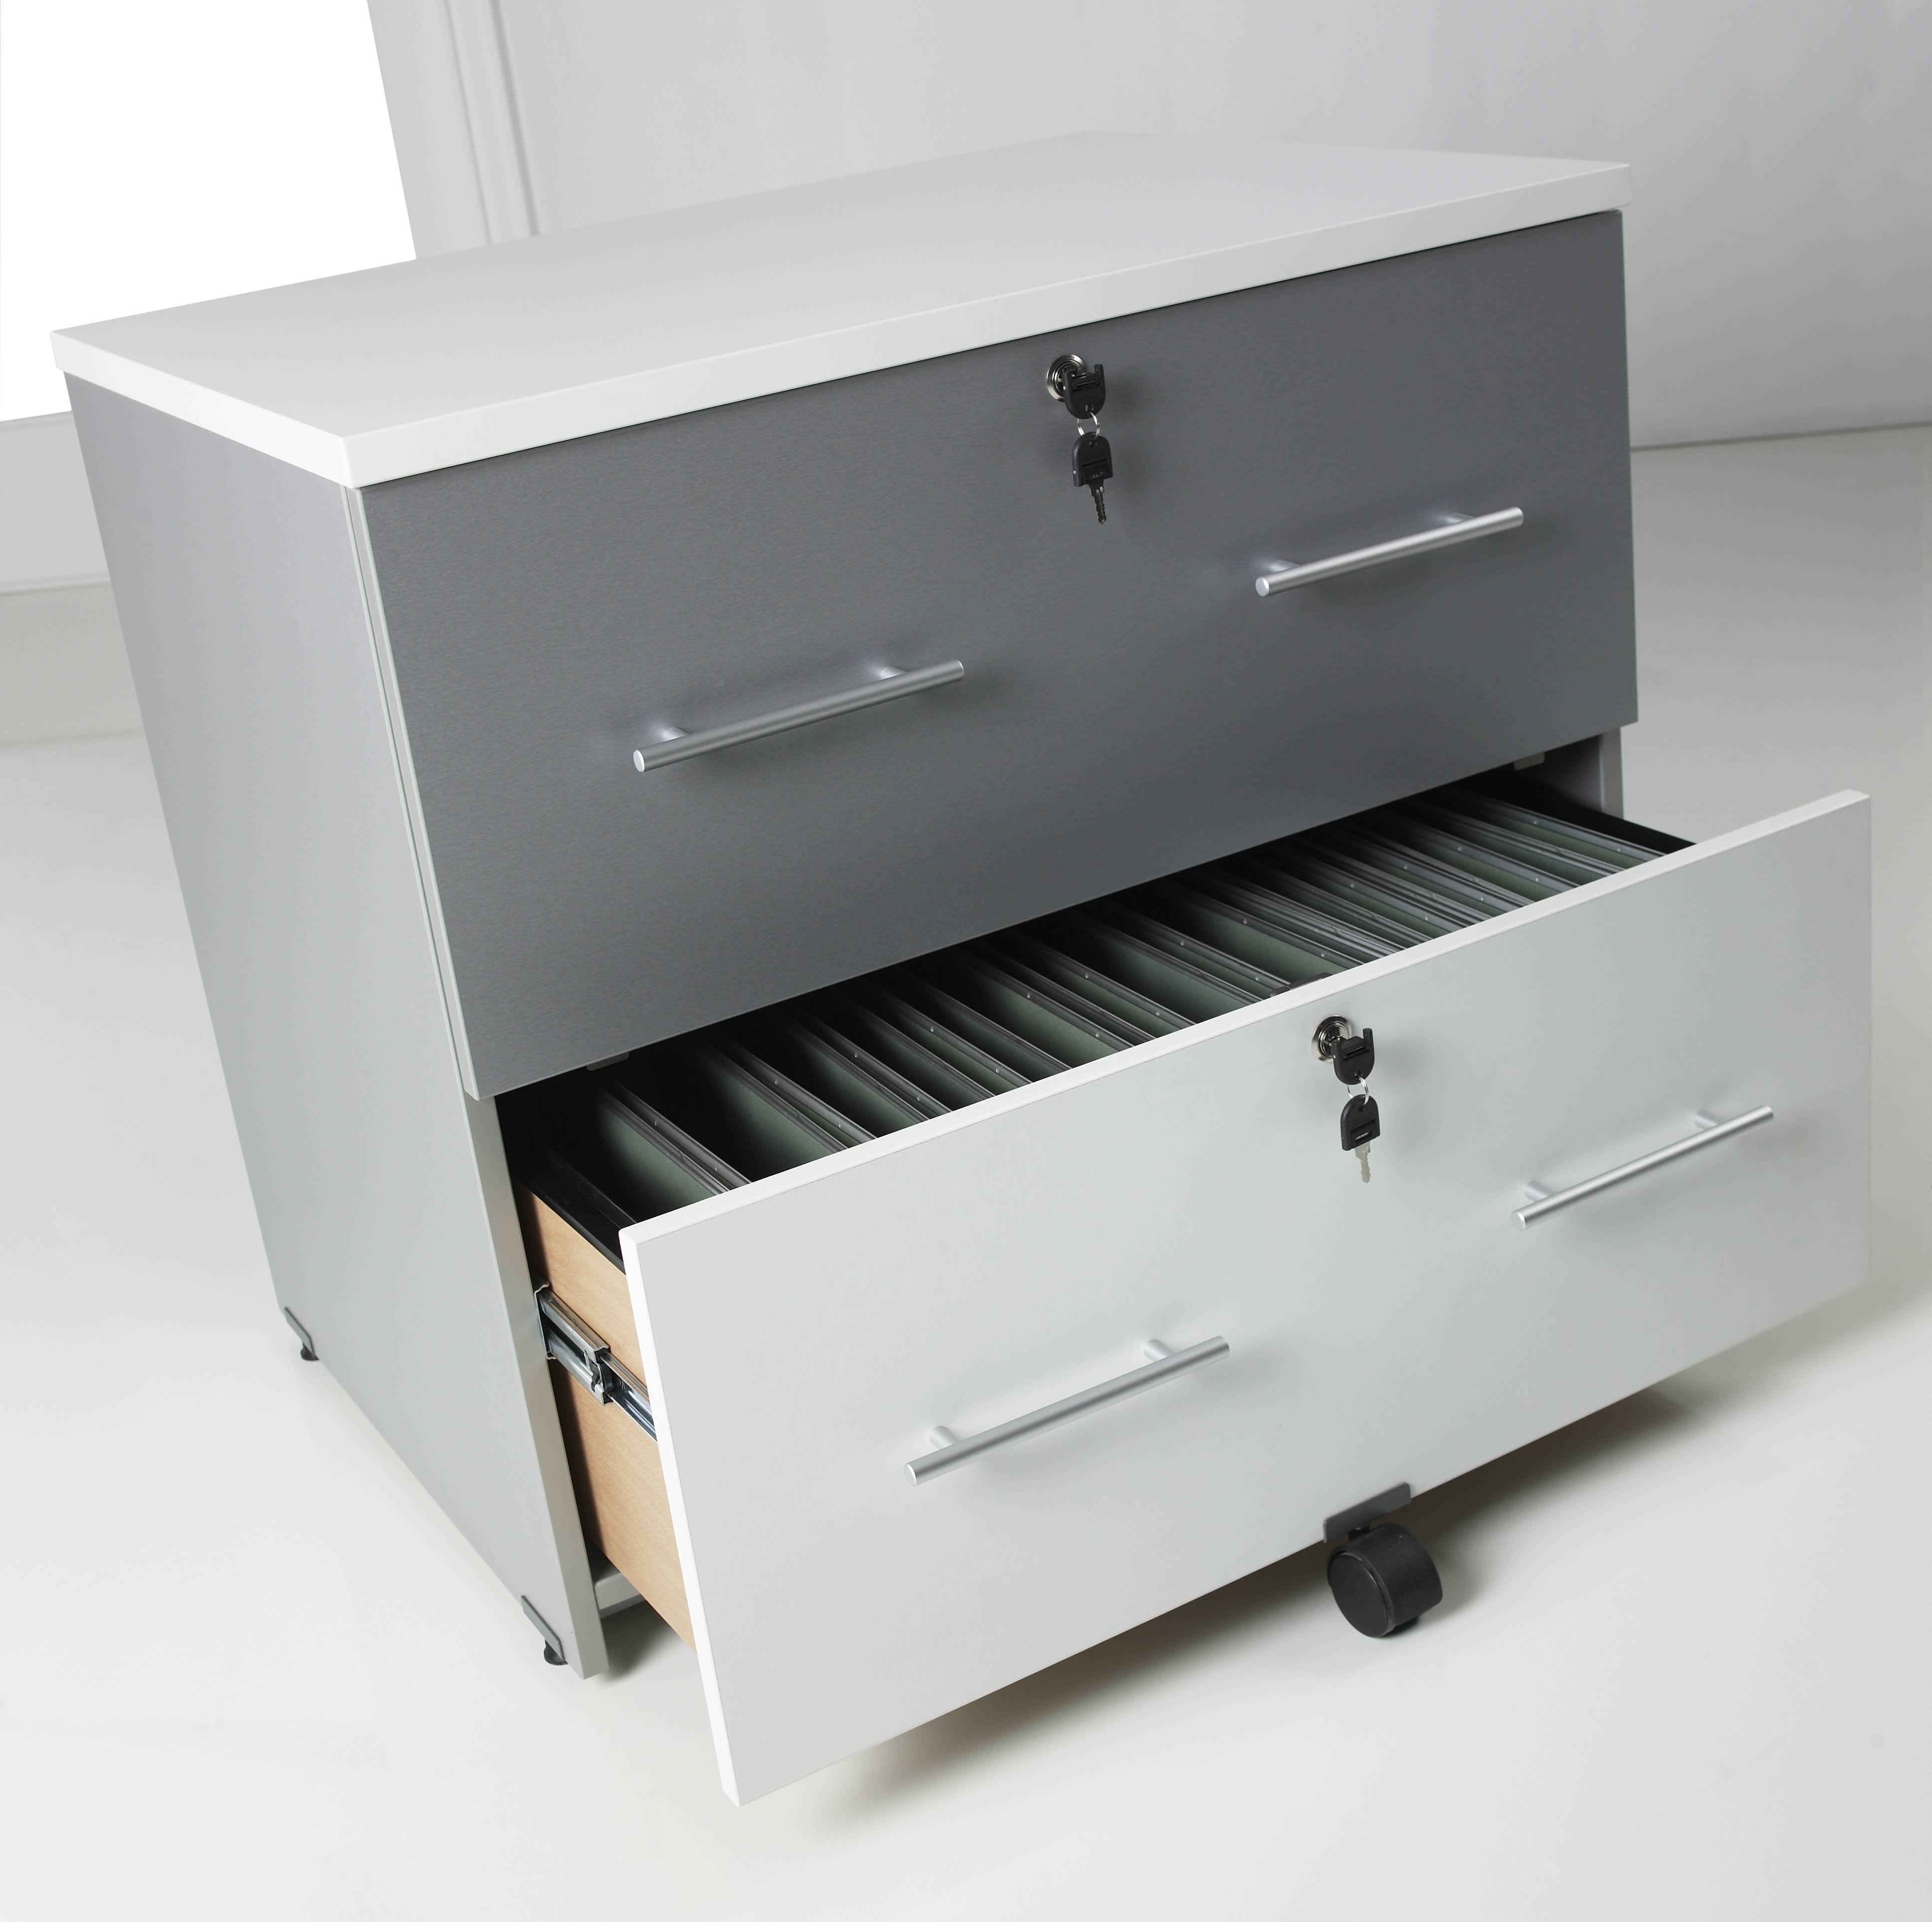 Porta Filing Cabinet Tps Office Furniture Ltd in sizing 3874 X 3854